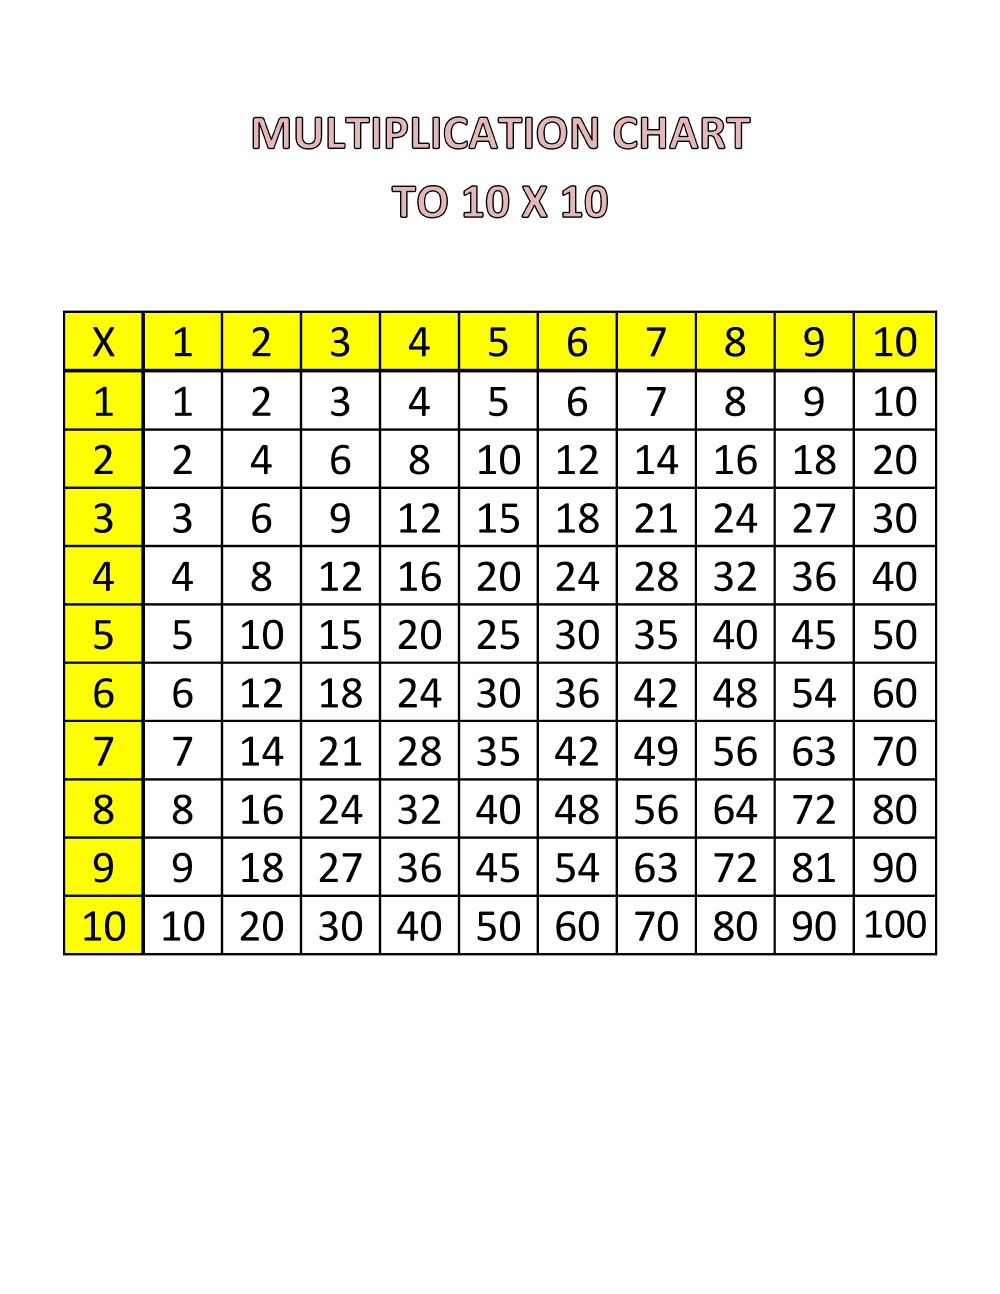 Multiplication Chart 10x10